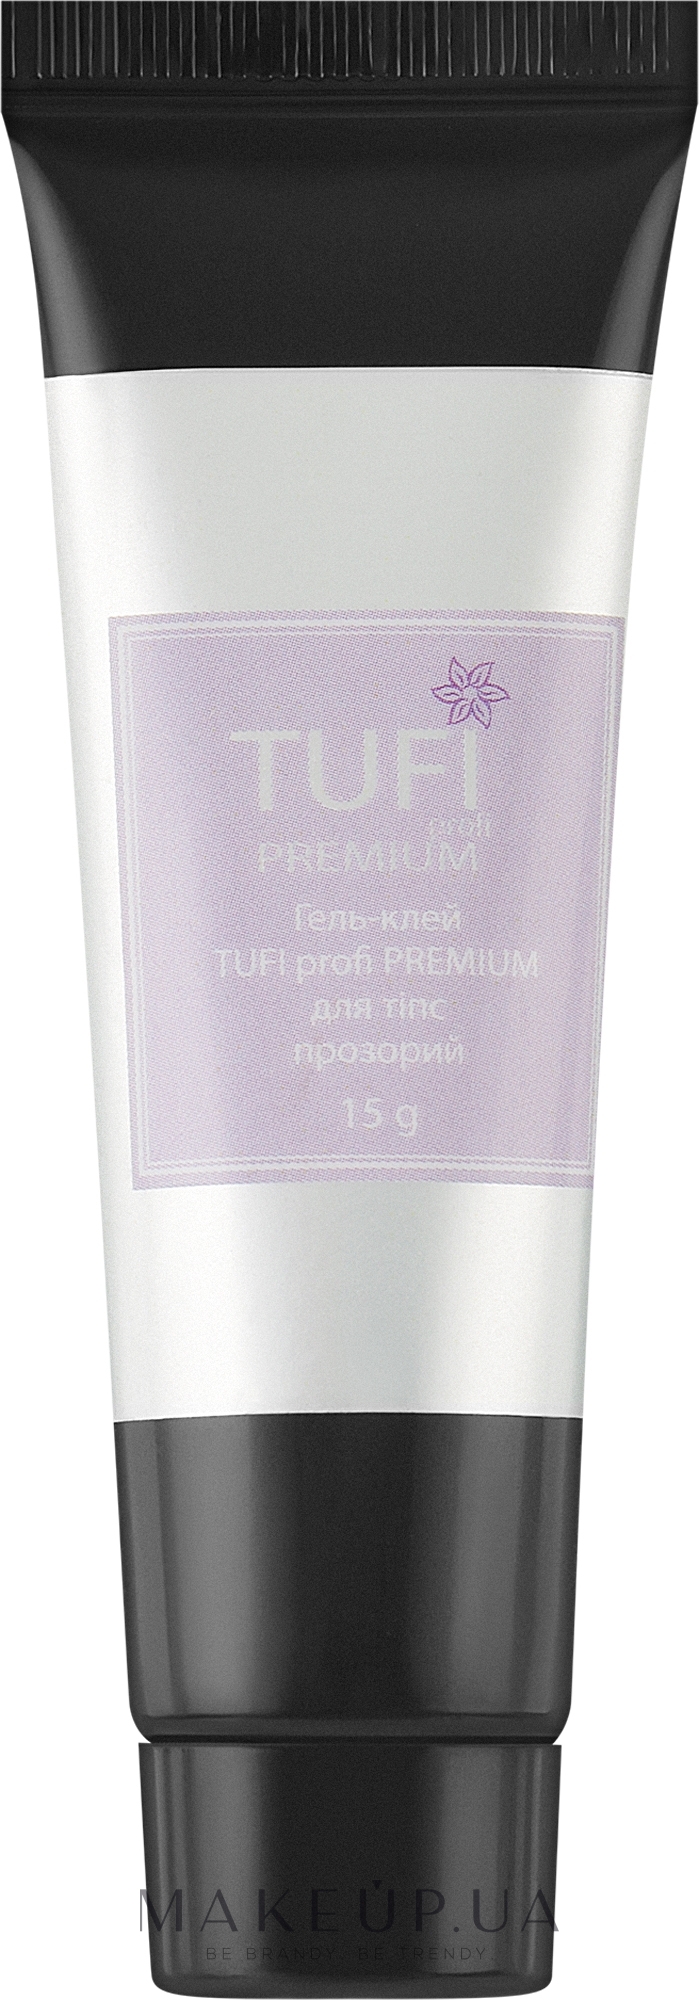 Tufi Profi Premium - Tufi Profi Premium — фото 15g